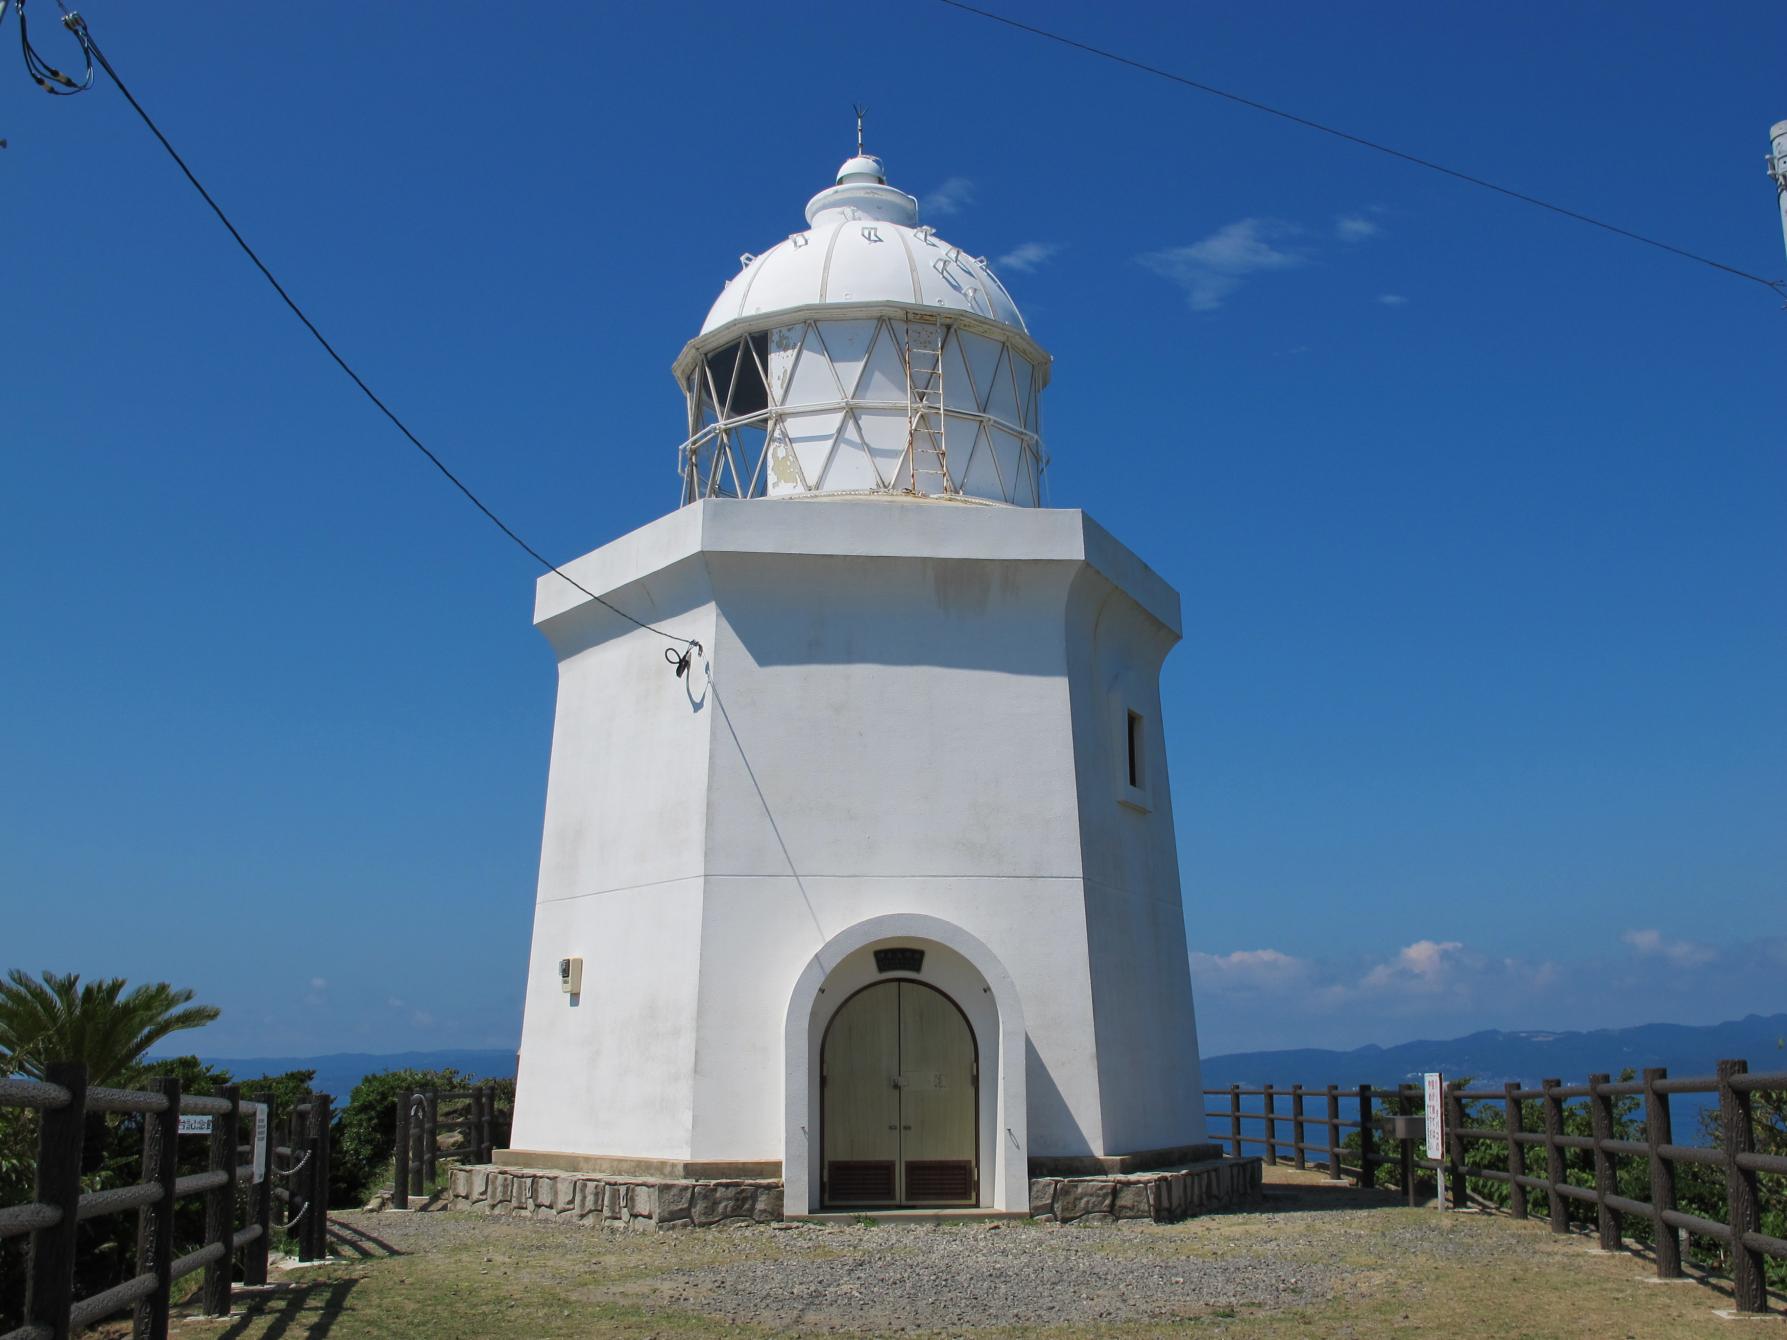 Iojima Lighthouse-1